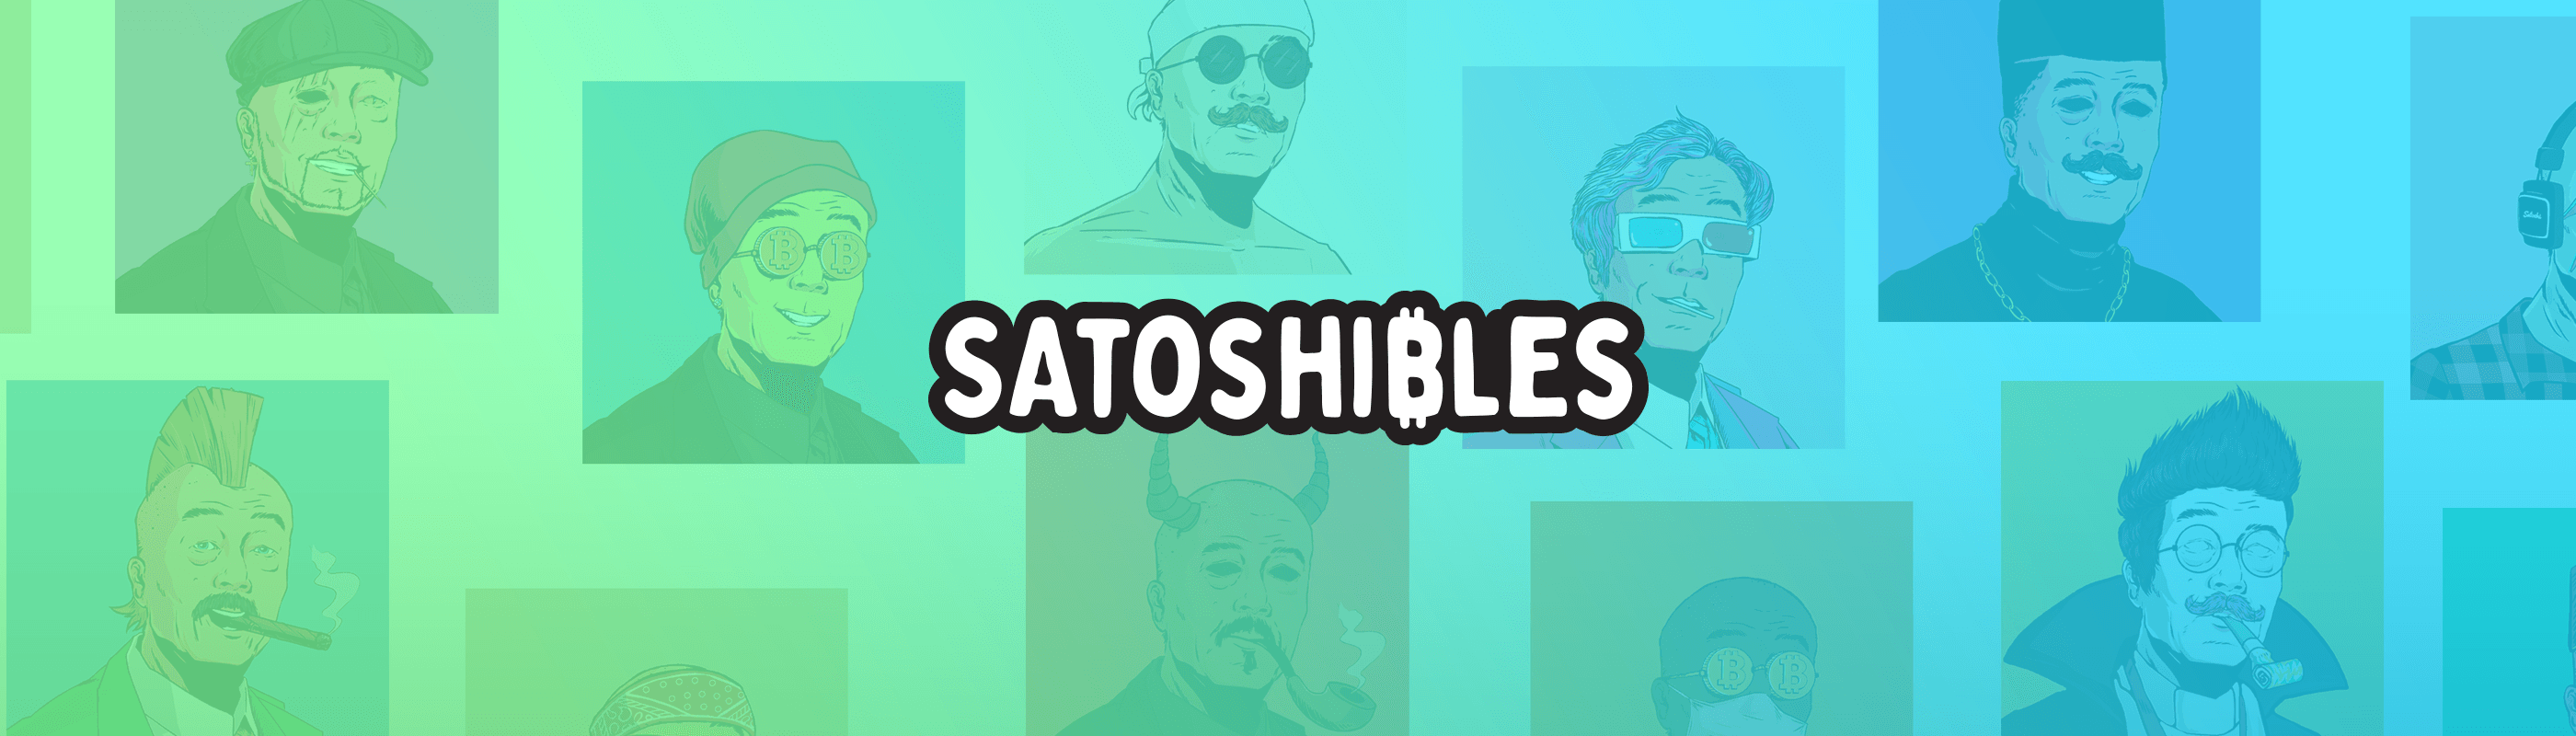 Satoshibles banner